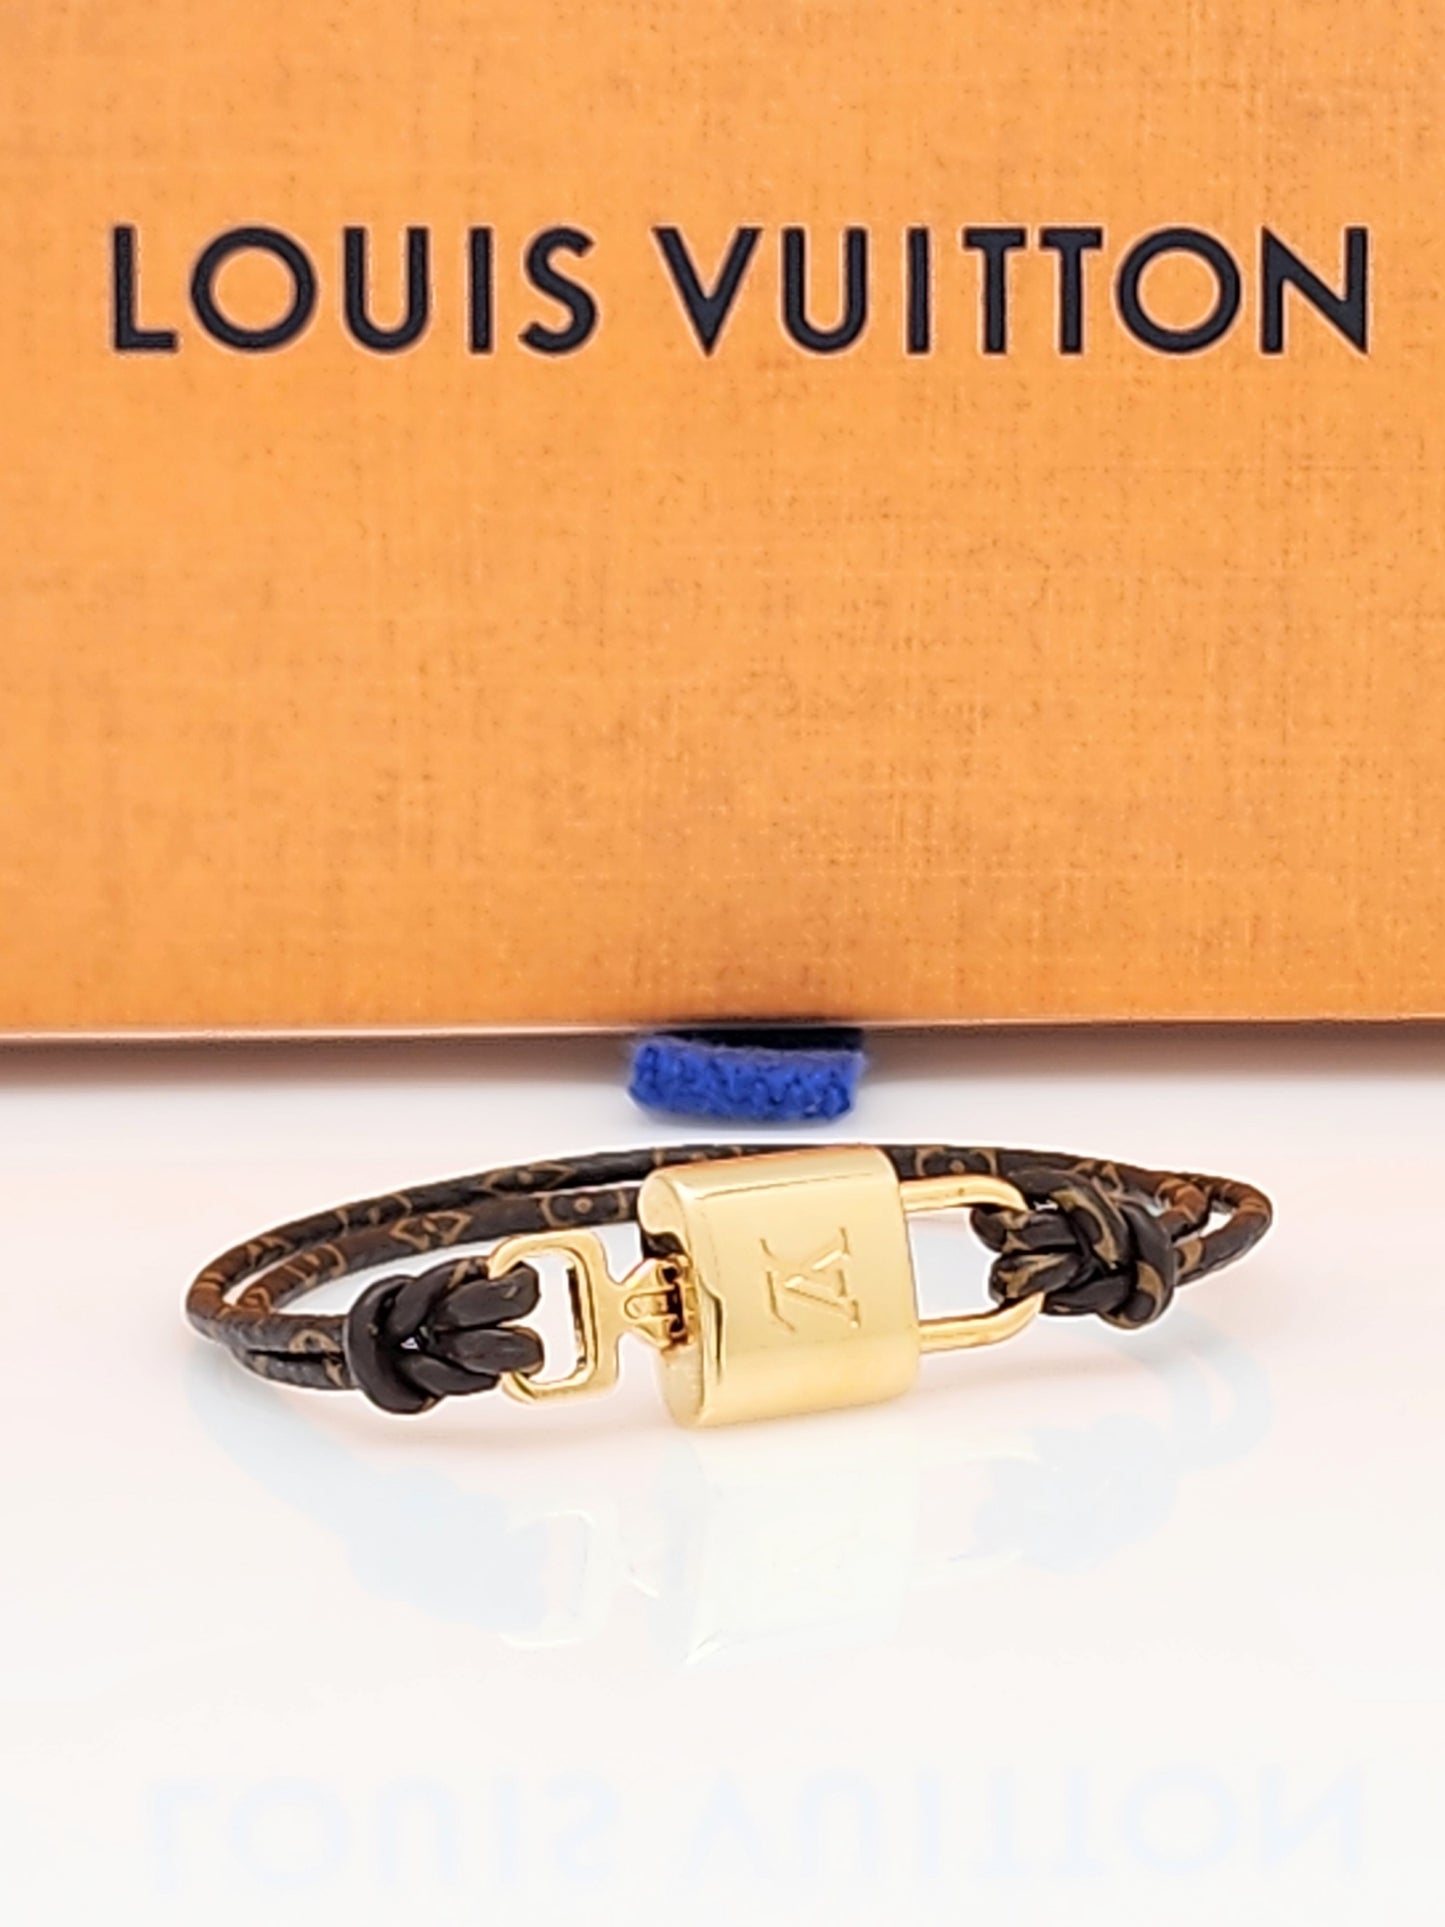 Louis Vuitton Padlock with Bracelet